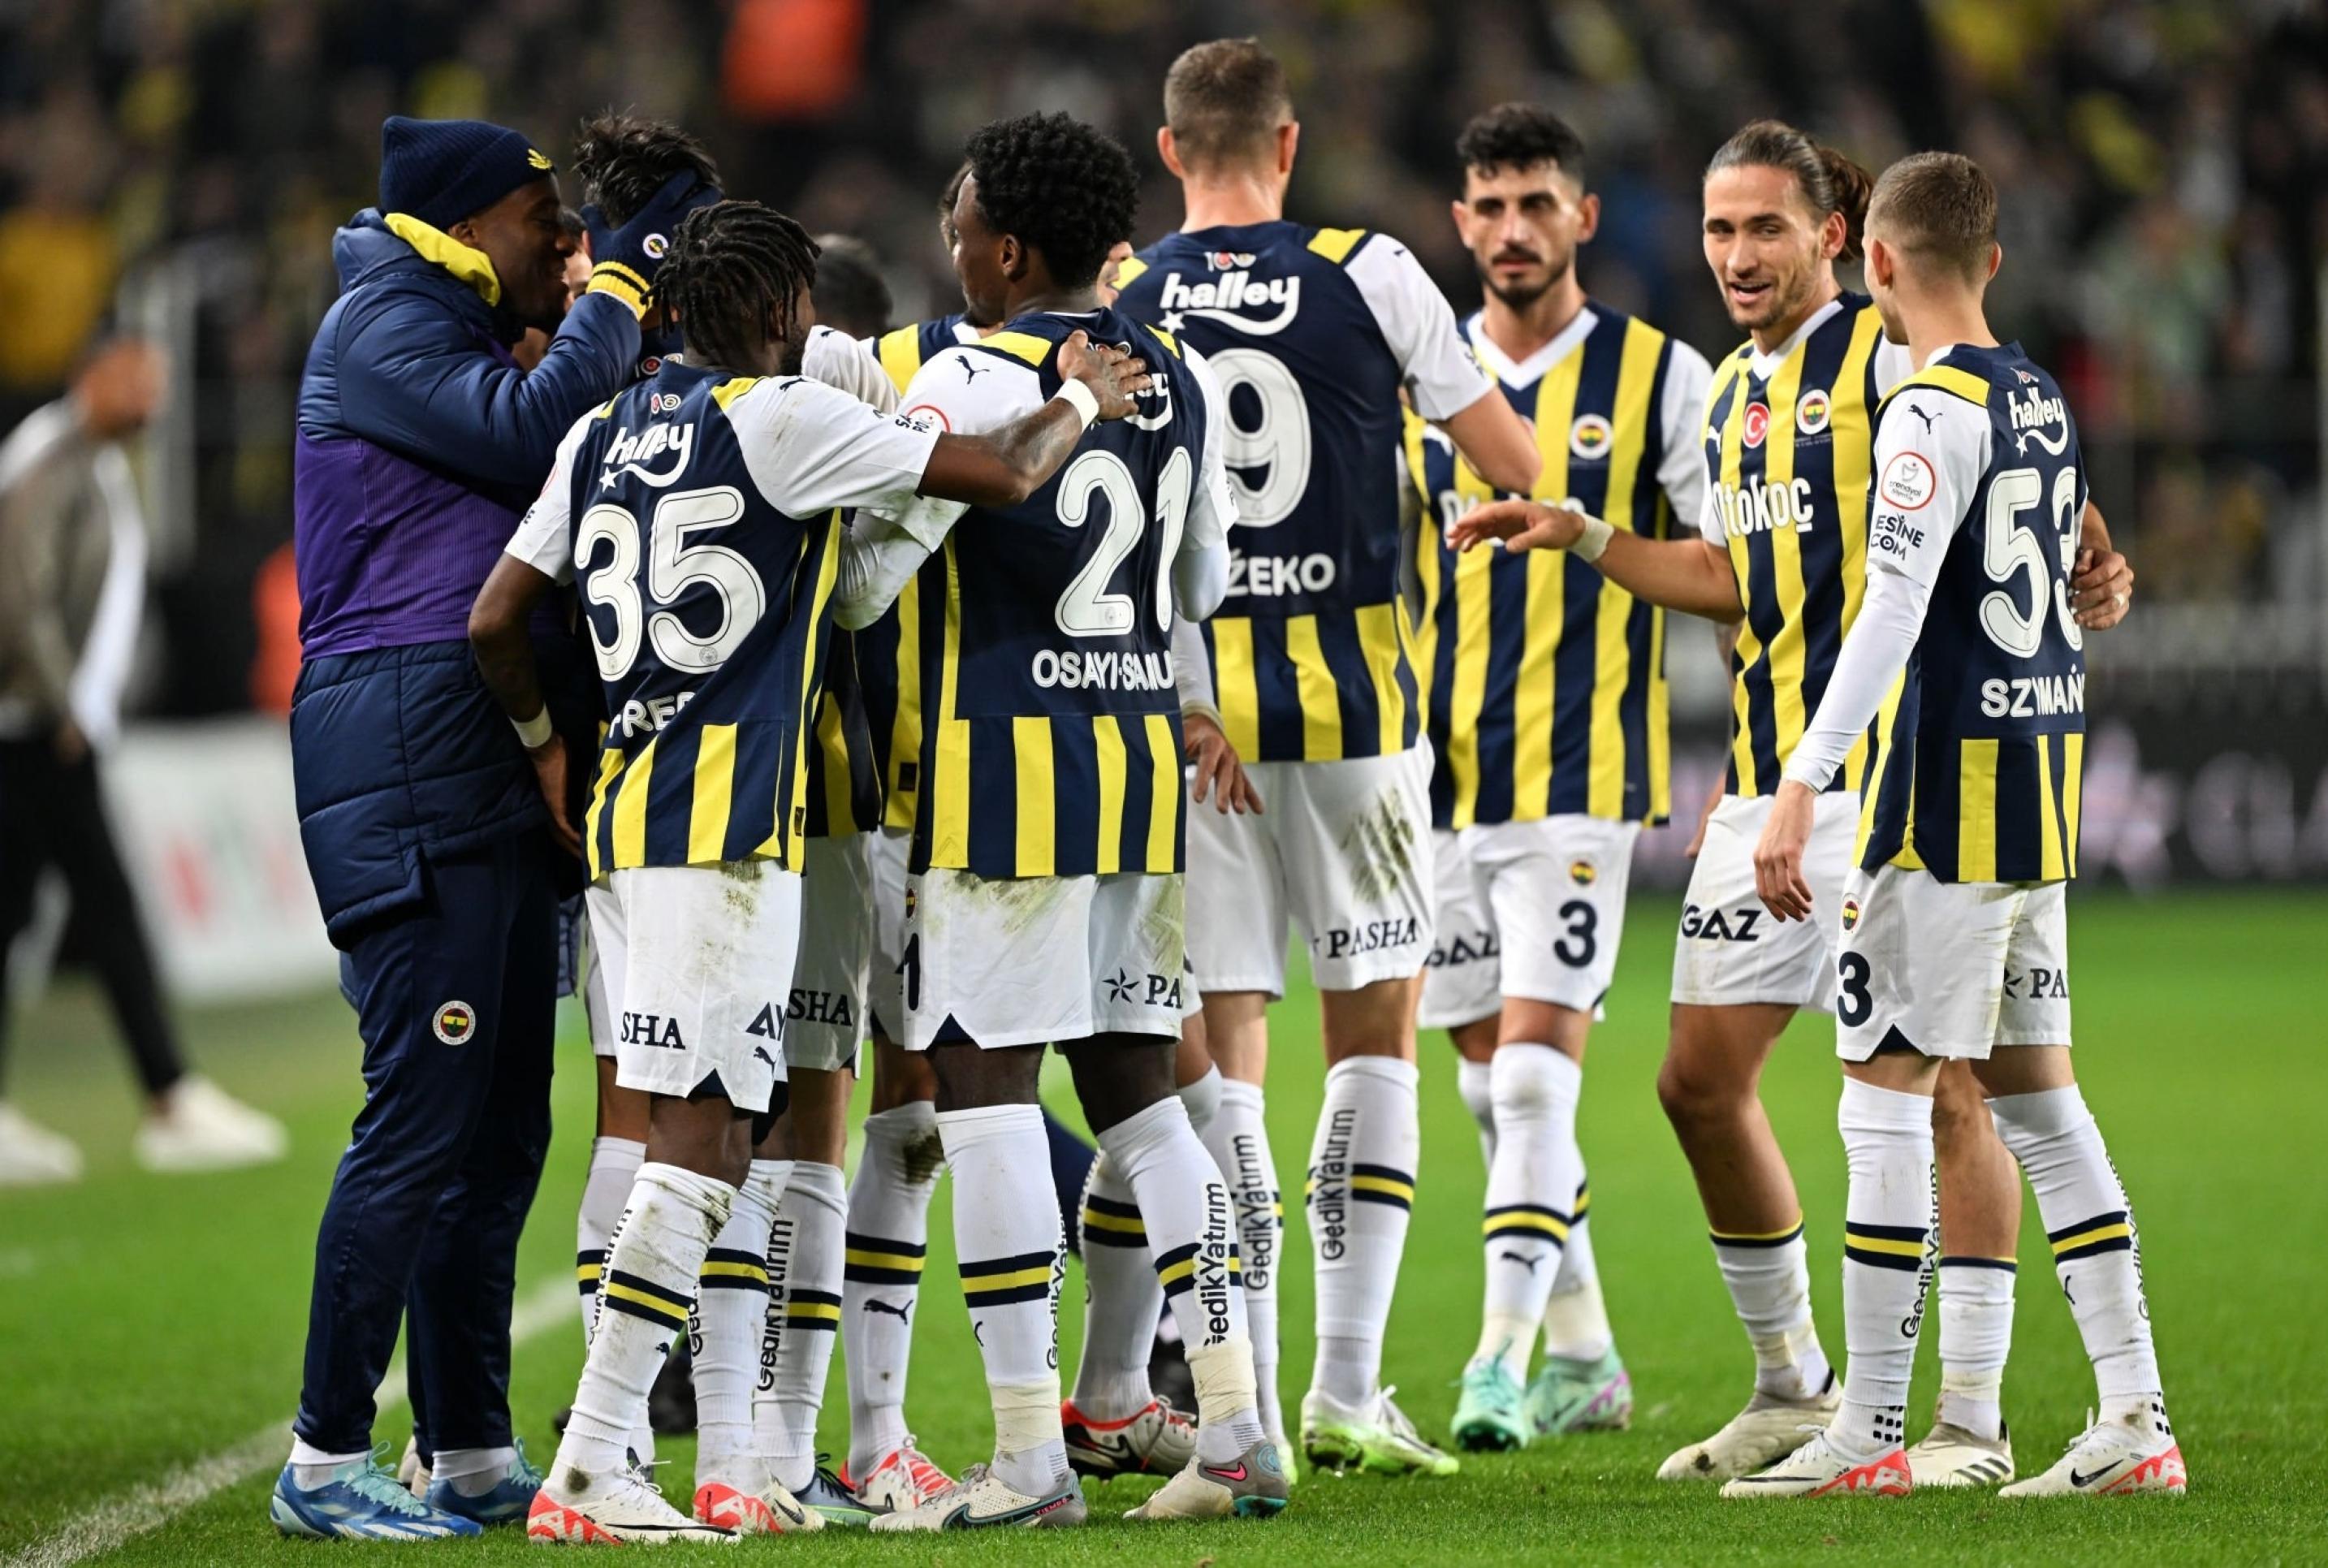 HL Süper Lig - Fenerbahçe vs. Sivasspor